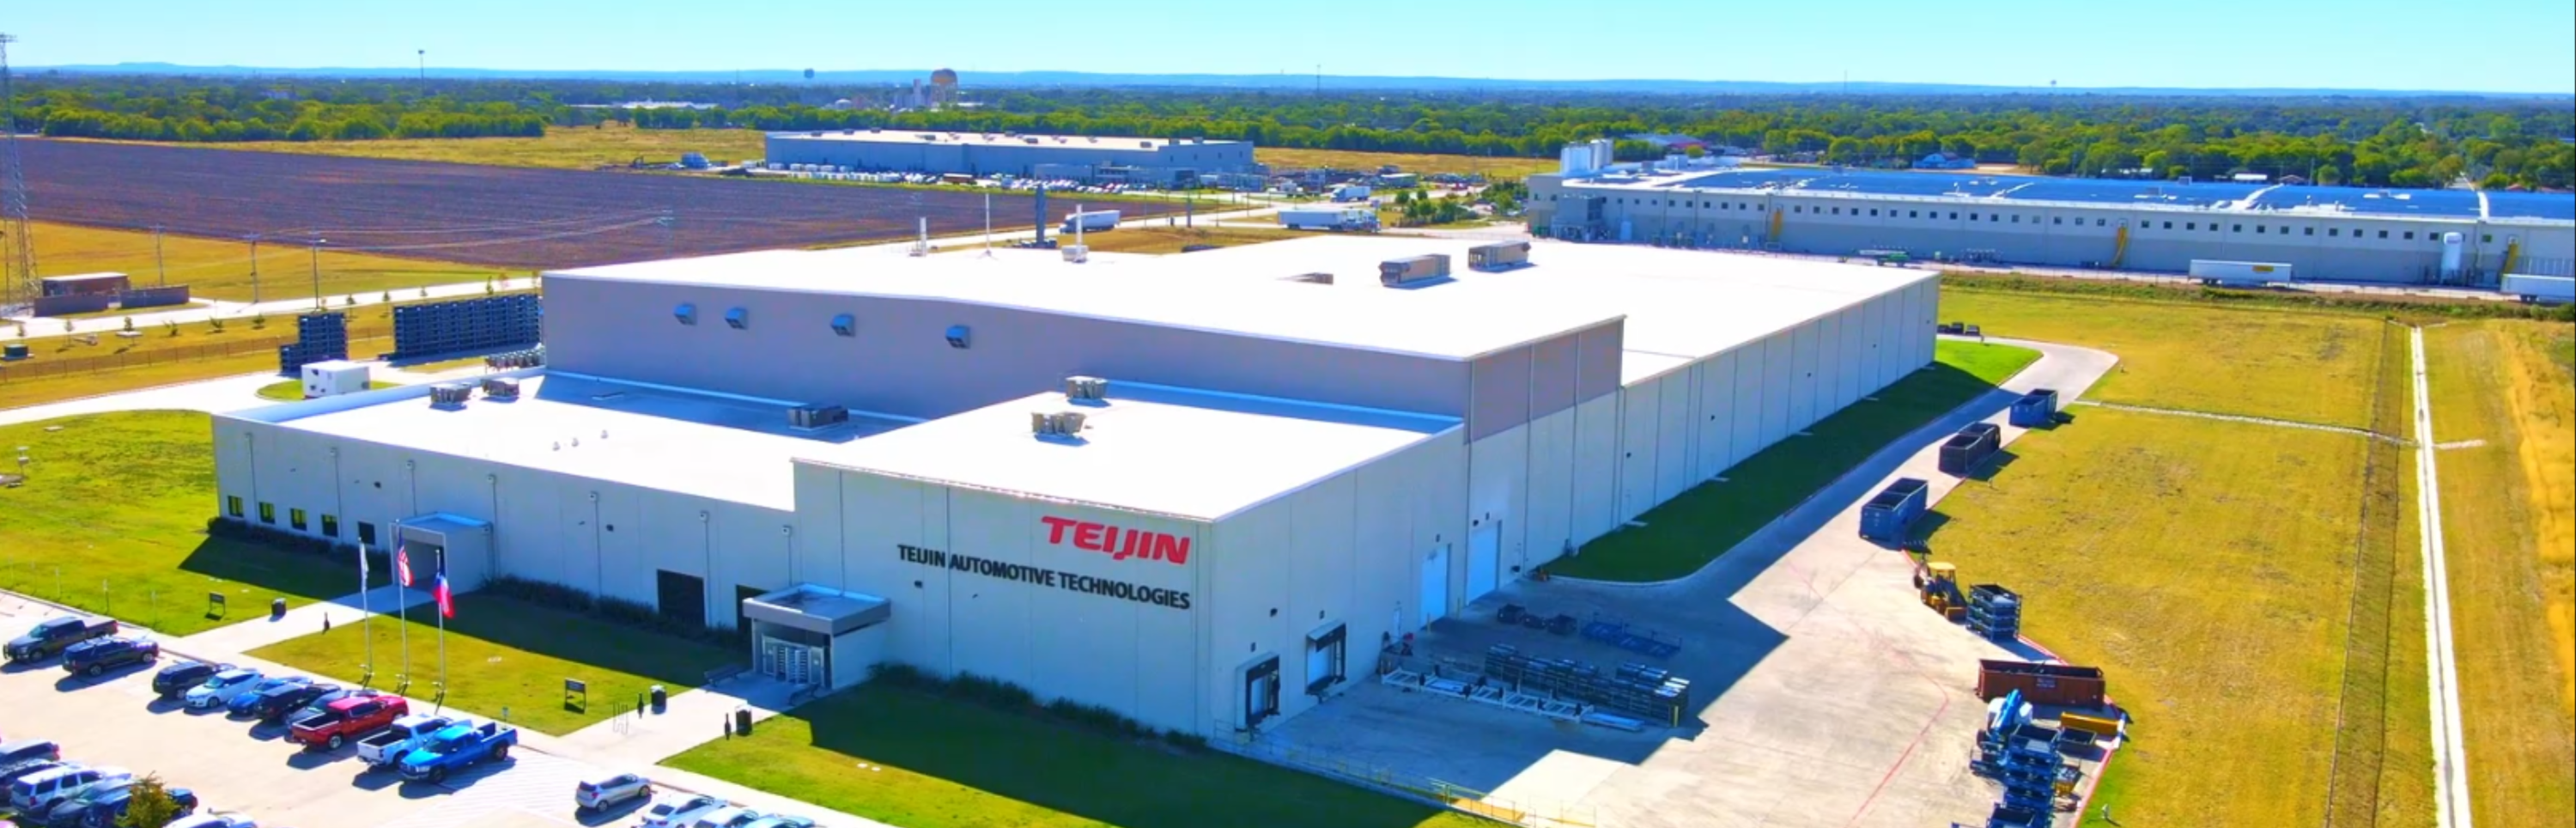 Teijin Automotive Technologies Facility